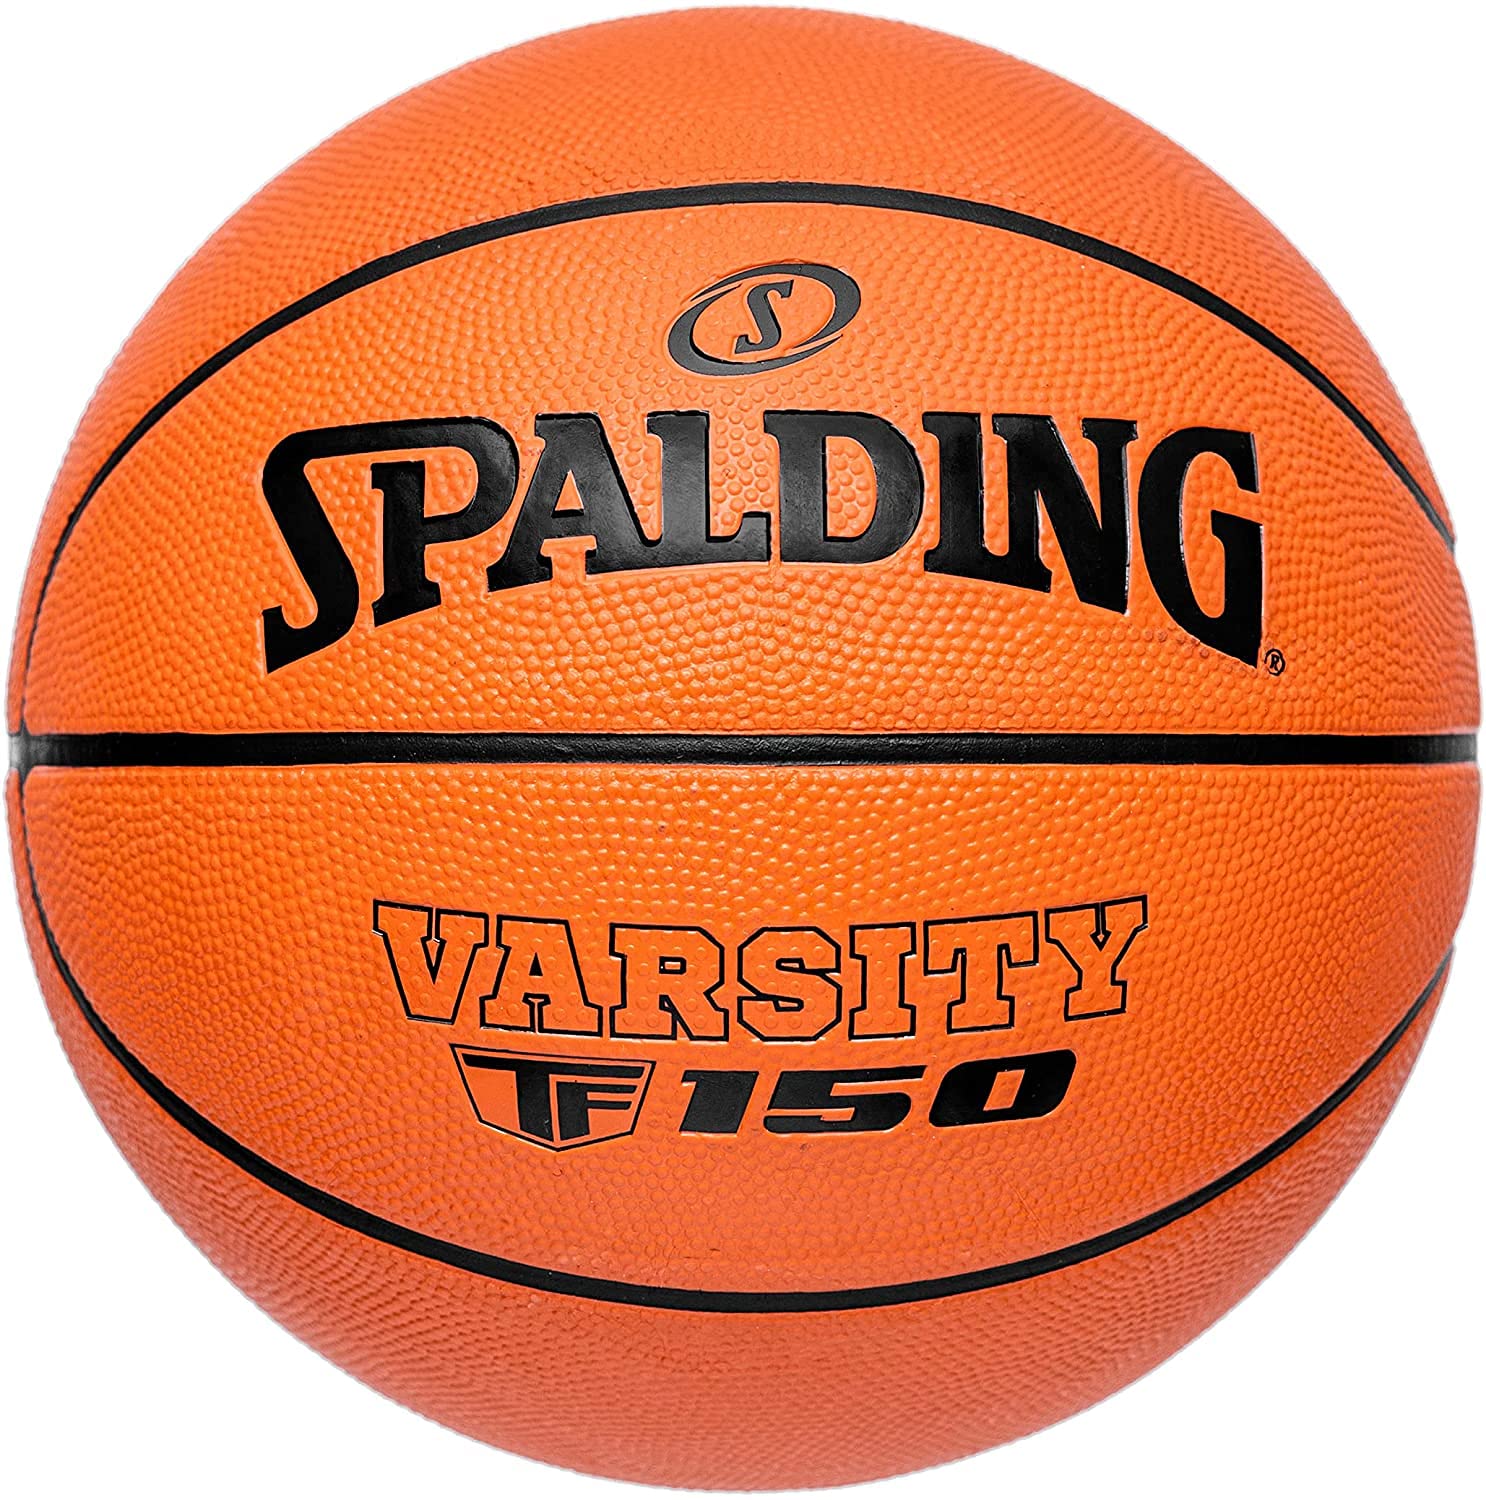 Spalding Basketball Ball Varsity TF-150 Size 7 Approved FIBA